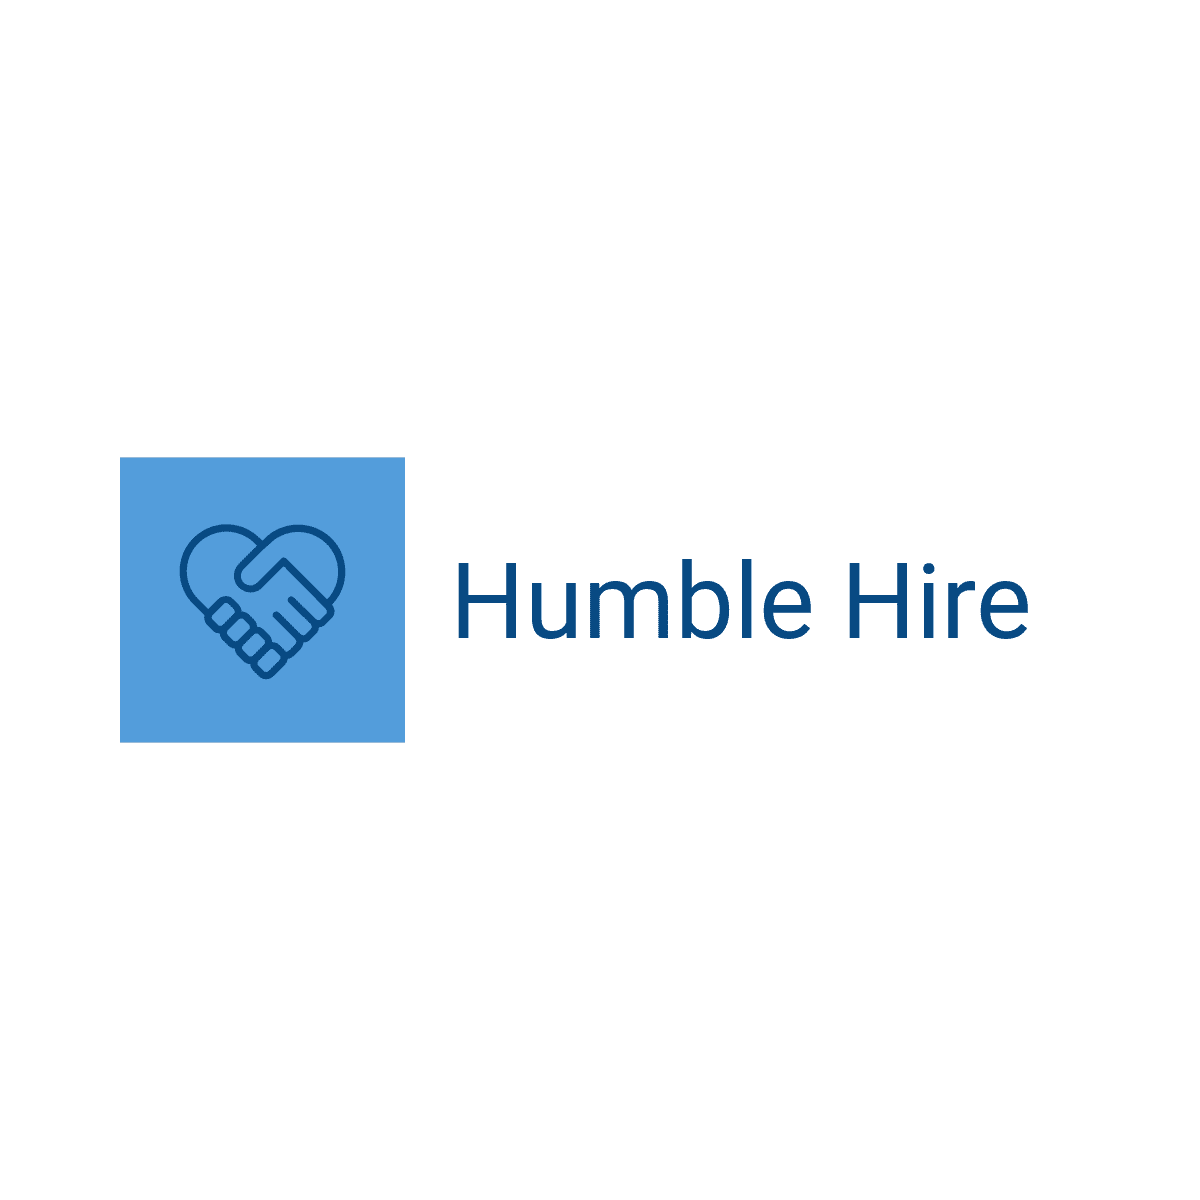 Humble Hire Branding Logo transparent